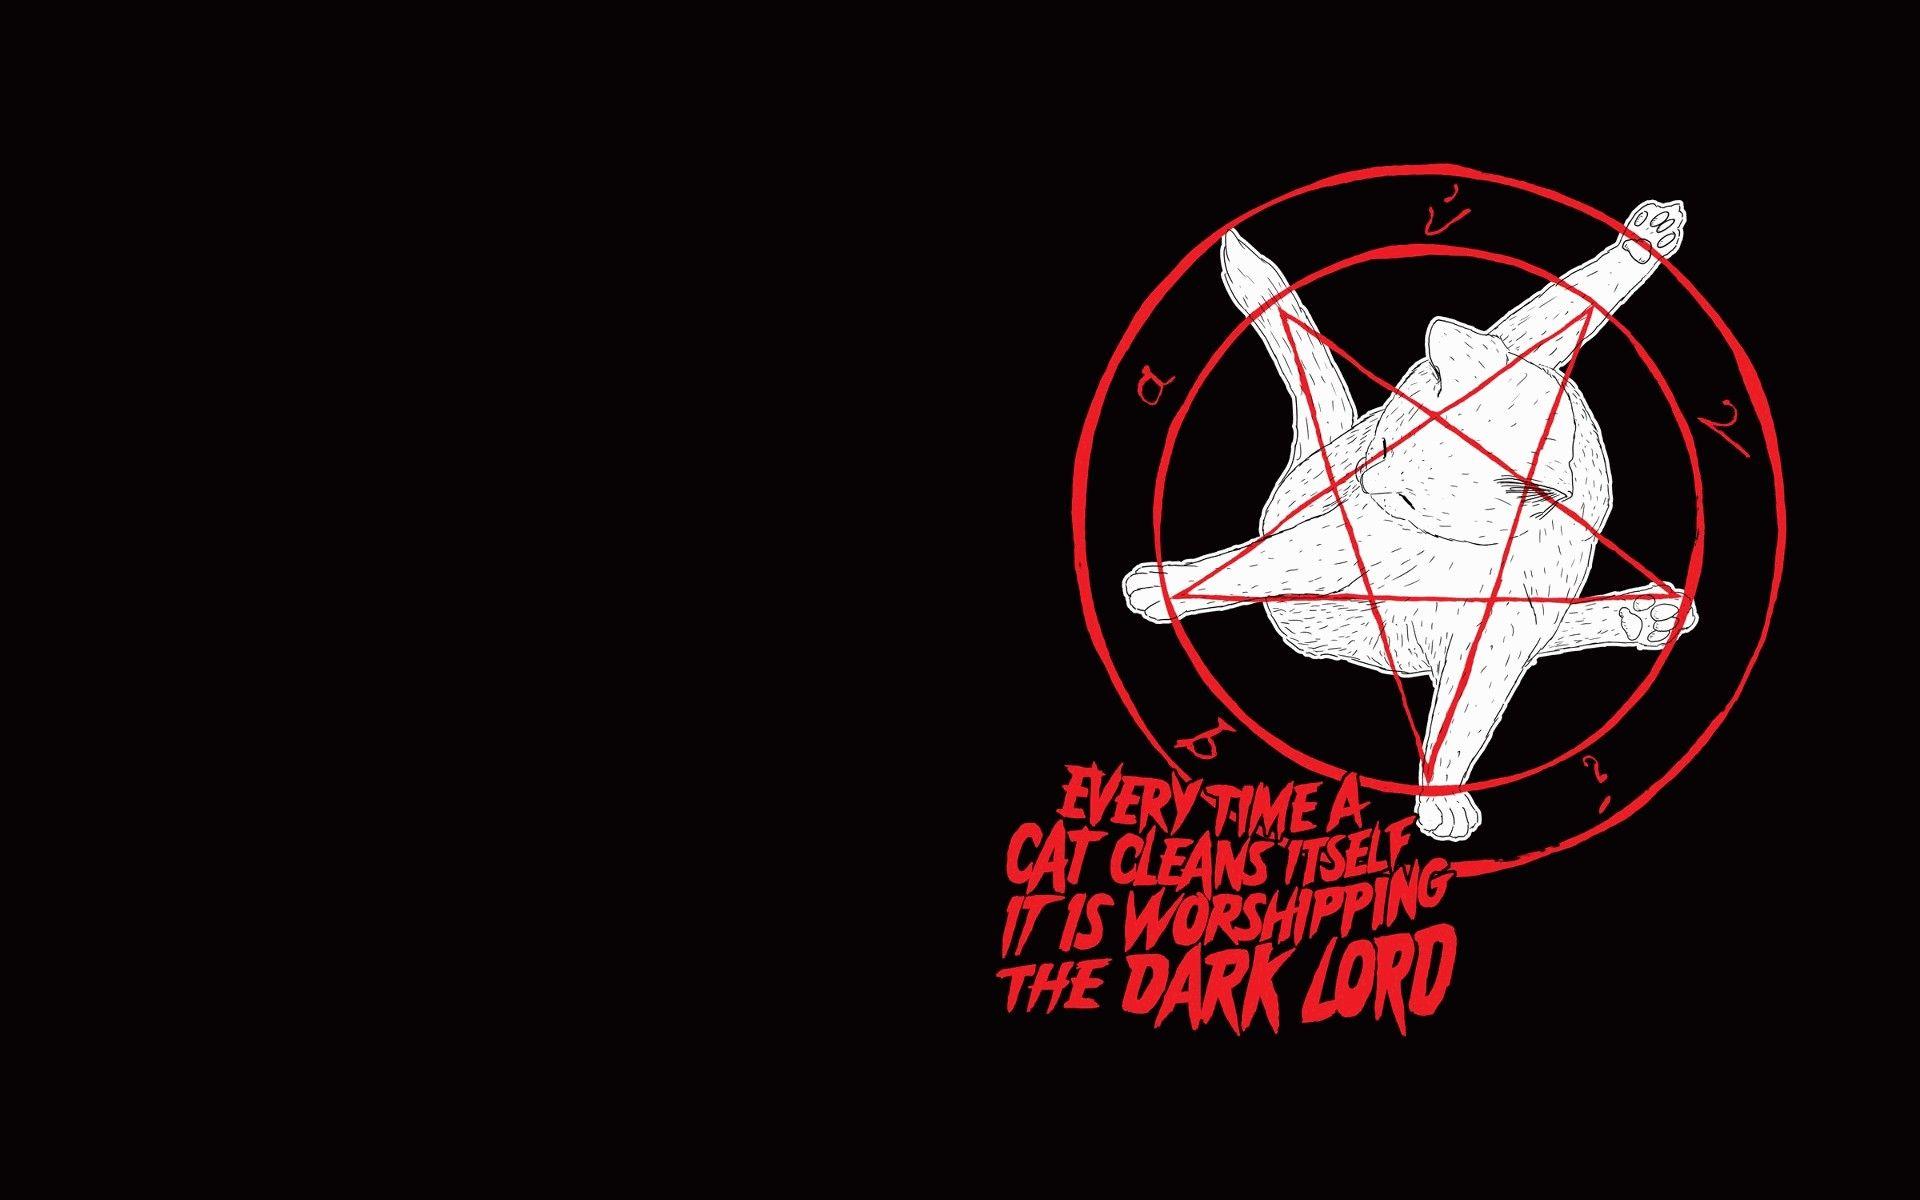 Cats pentagram satanism wallpaper. PC